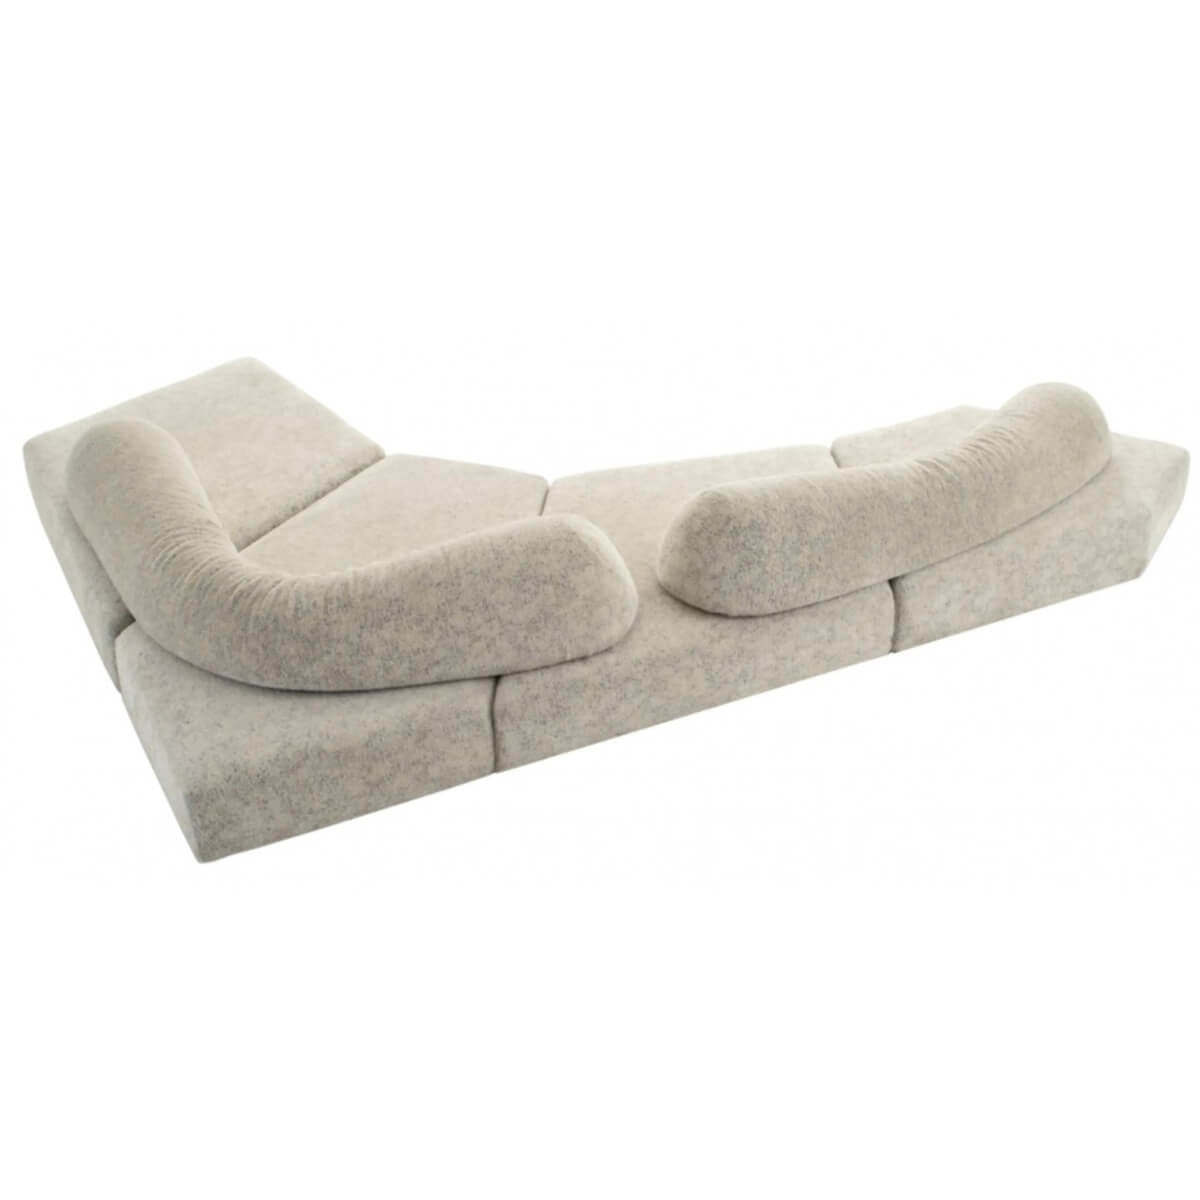 Dreamweaver Teddy fabric Sofa Set: A Soft and Serene Escape